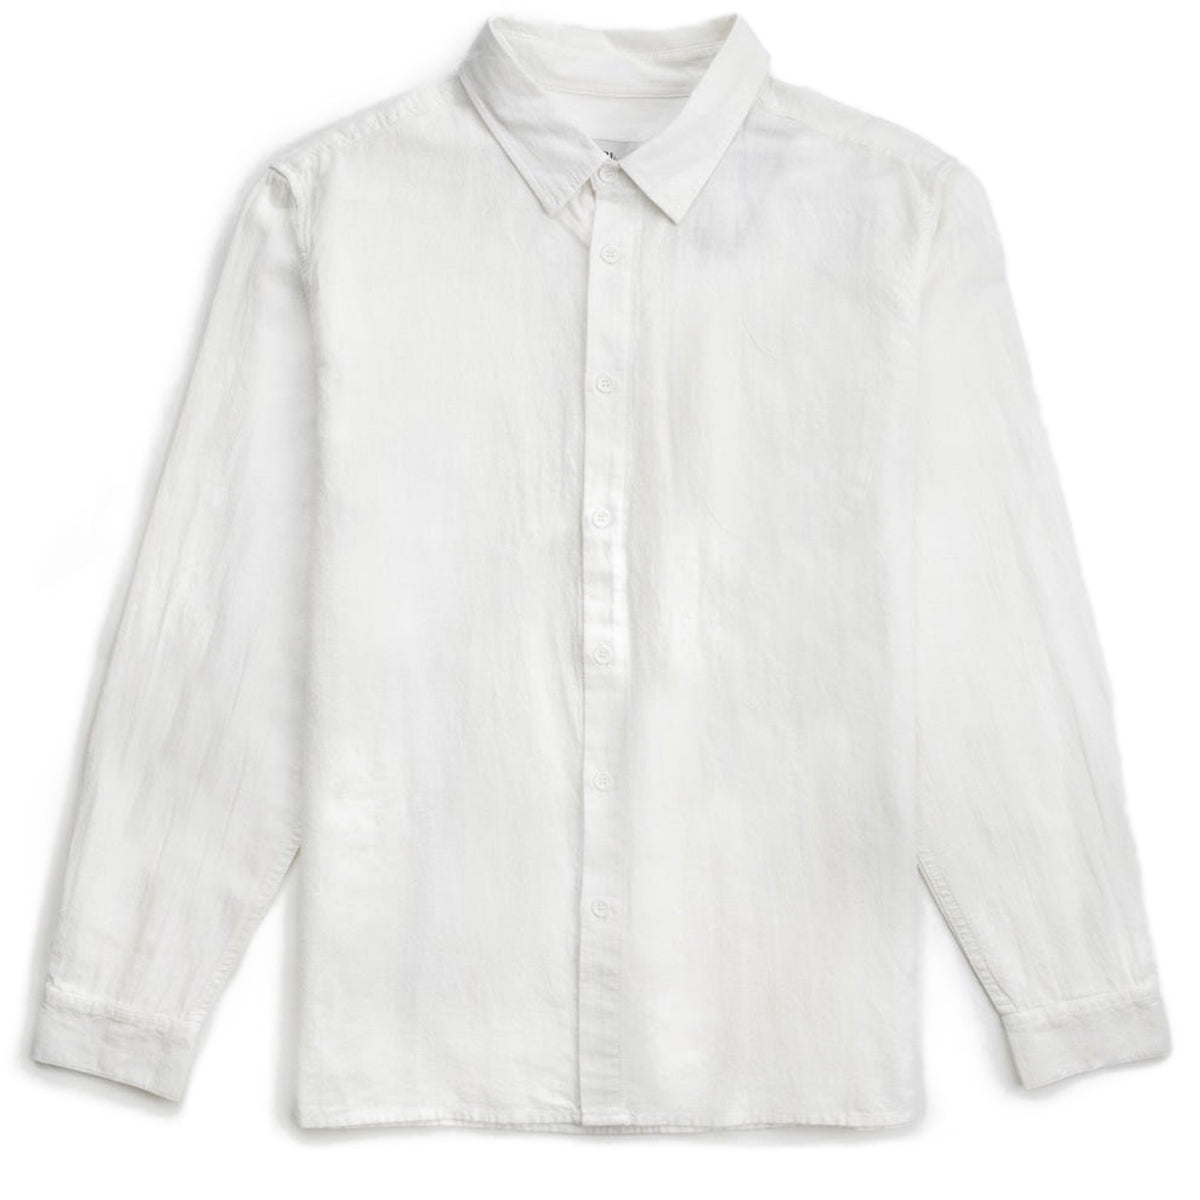 Rhythm Classic Linen Long Sleeve Shirt - Vintage White image 3